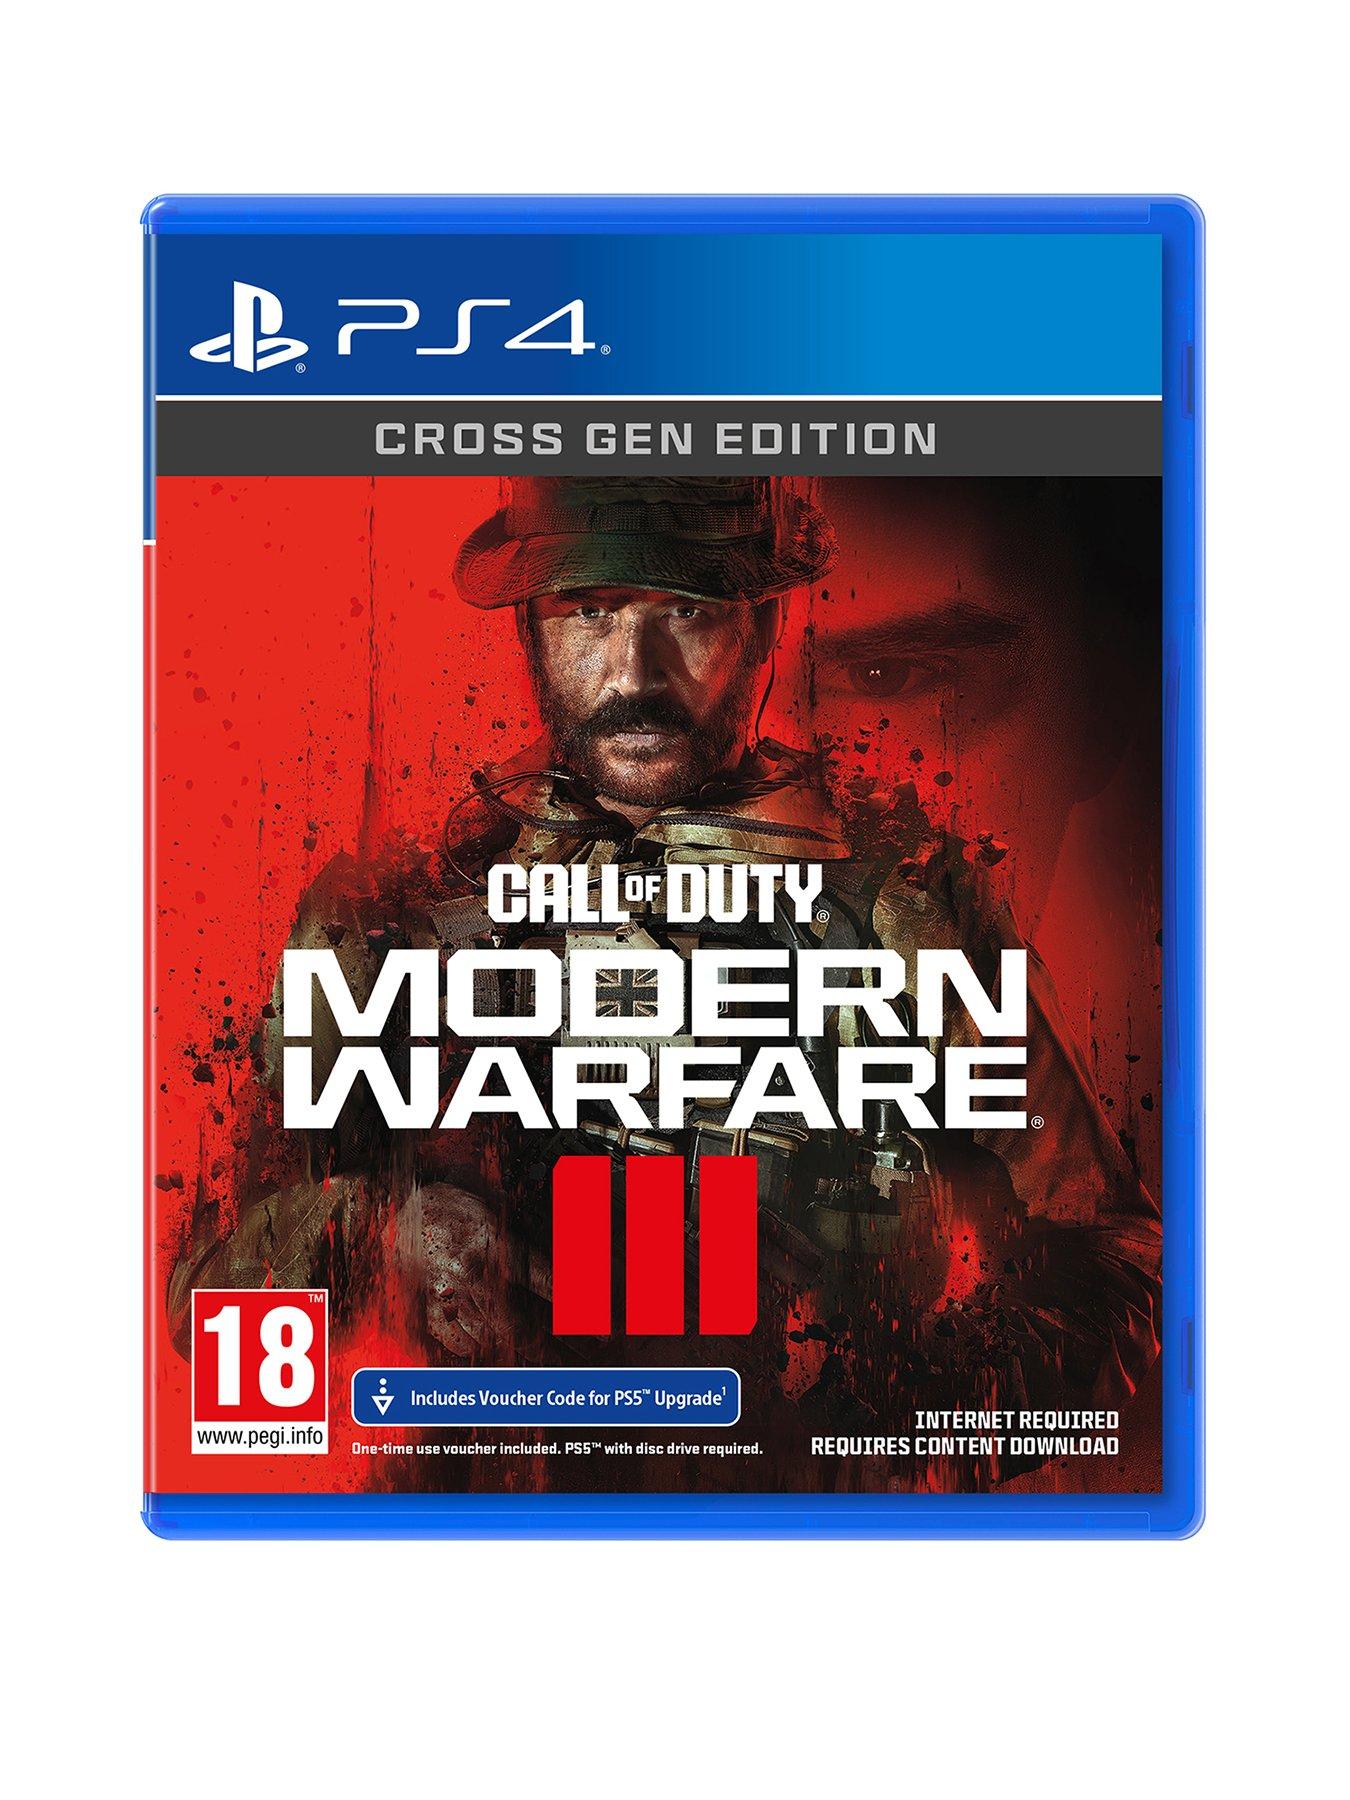 Call of Duty®: Warzone™ - Combat Pack (Shogun)